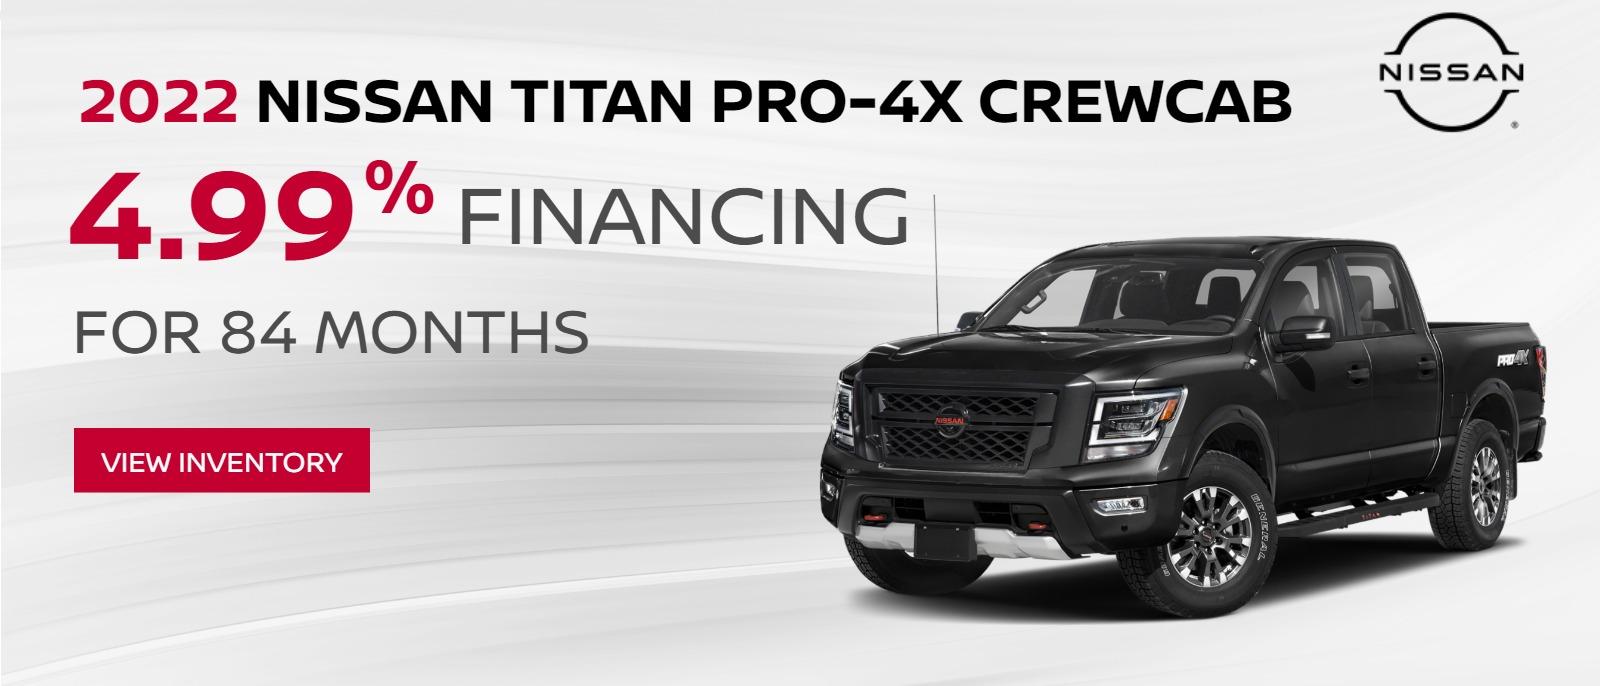 2022 Titan Pro-4X crewcab
3.99%, 75 months